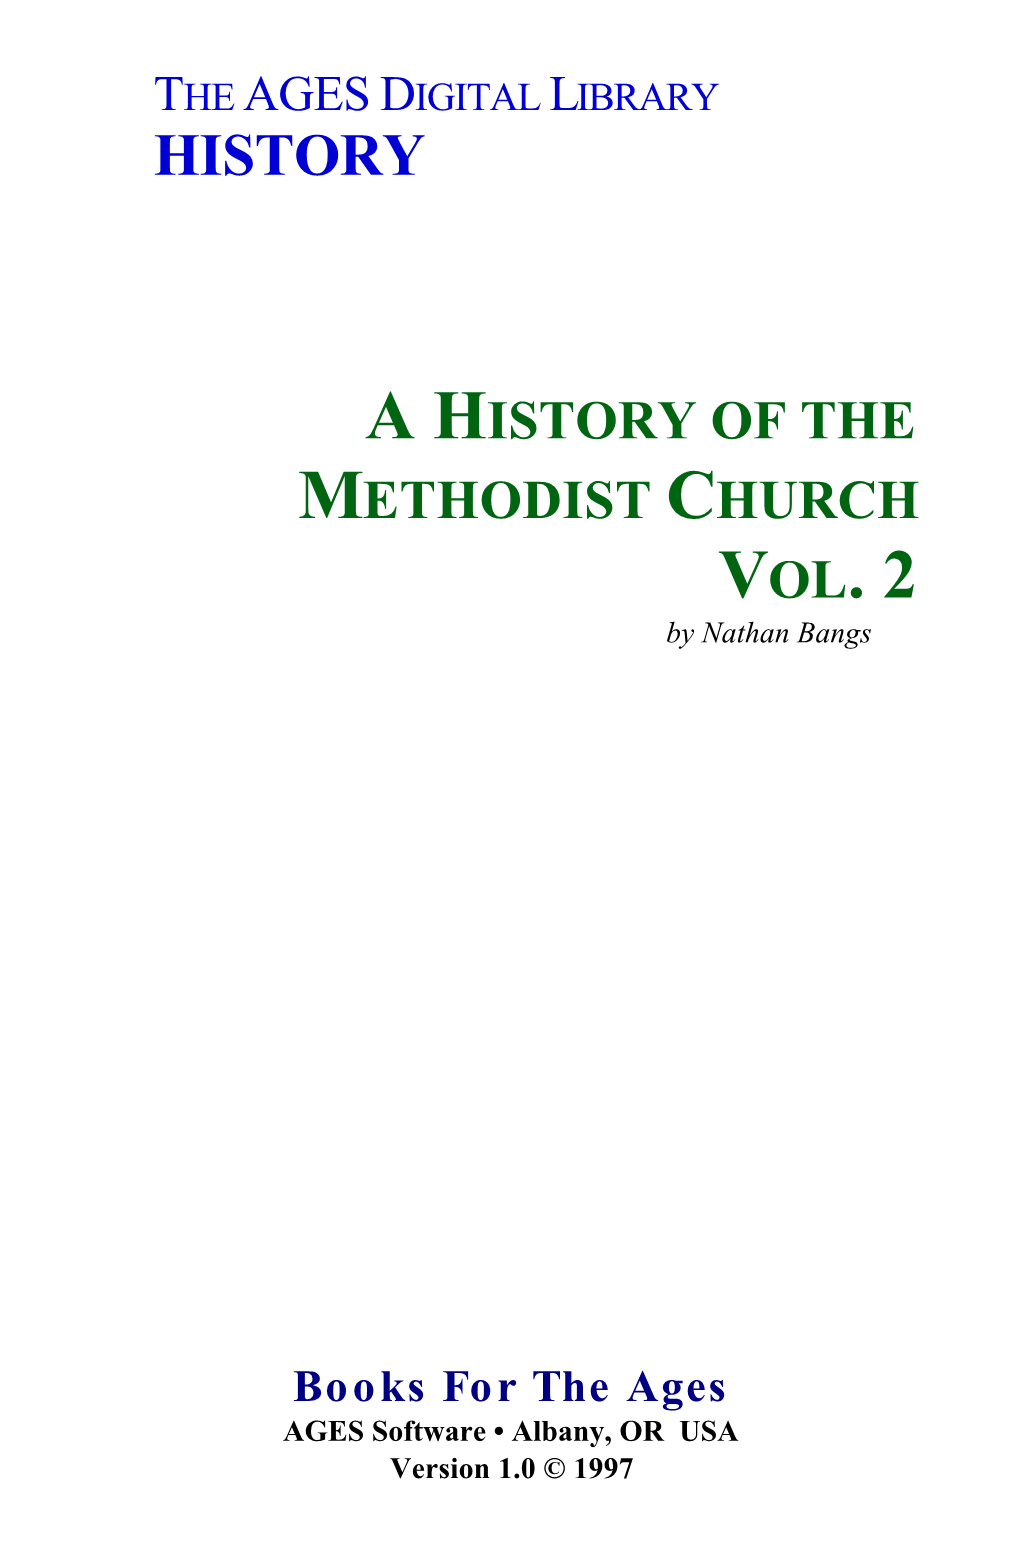 History of the Methodist Church